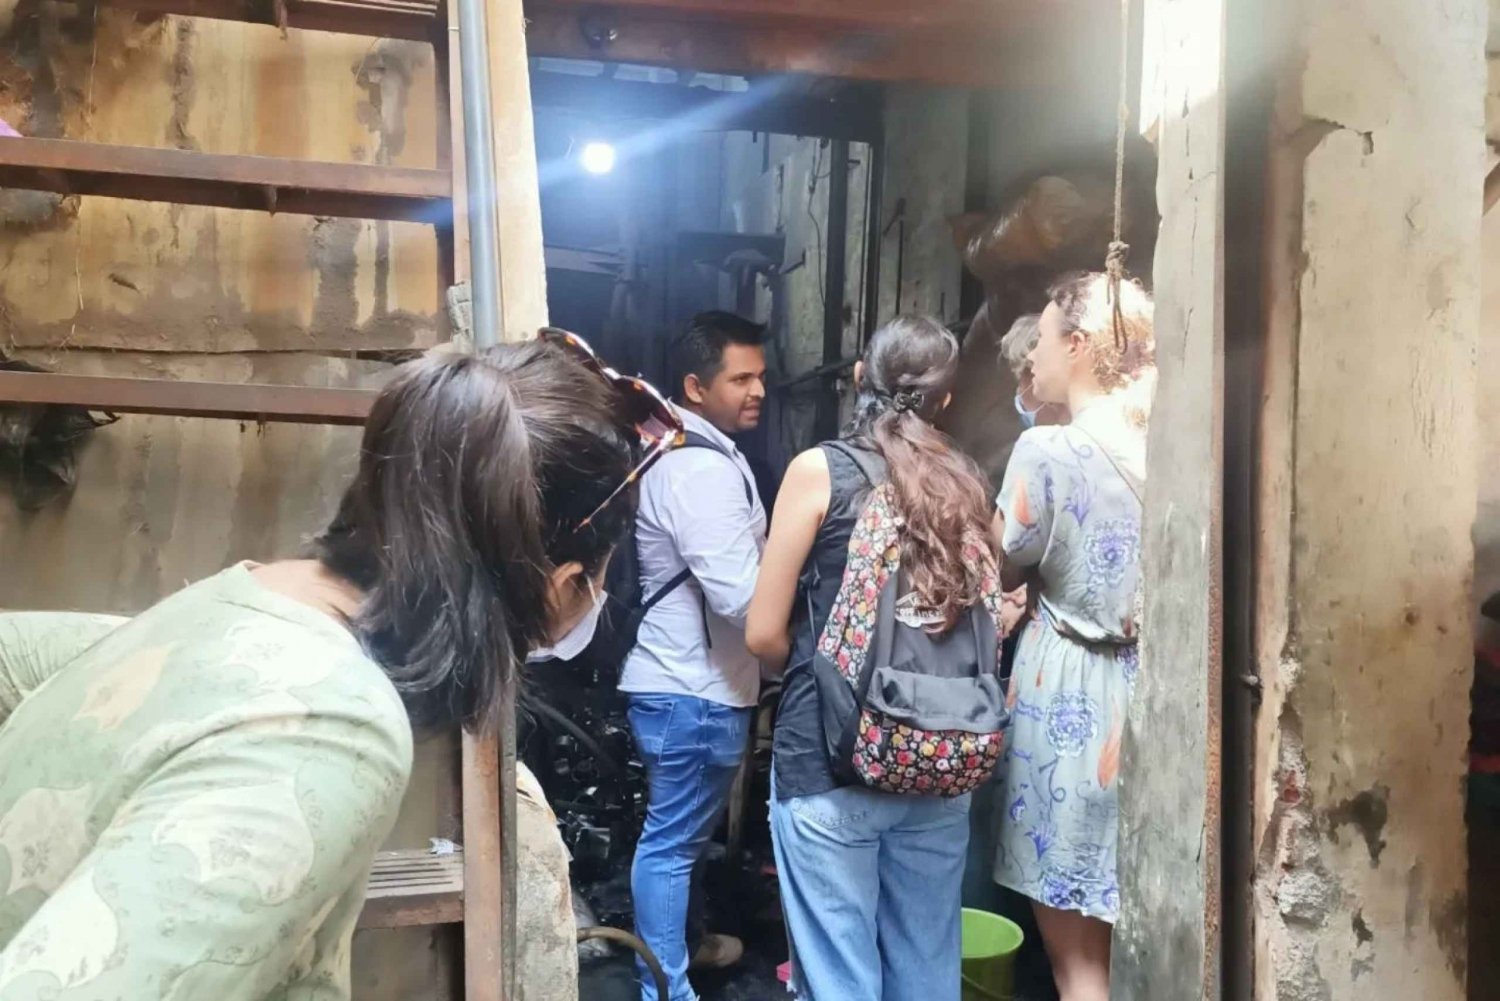 Mumbai: Private City sightseeing and Dharavi Slum Tour